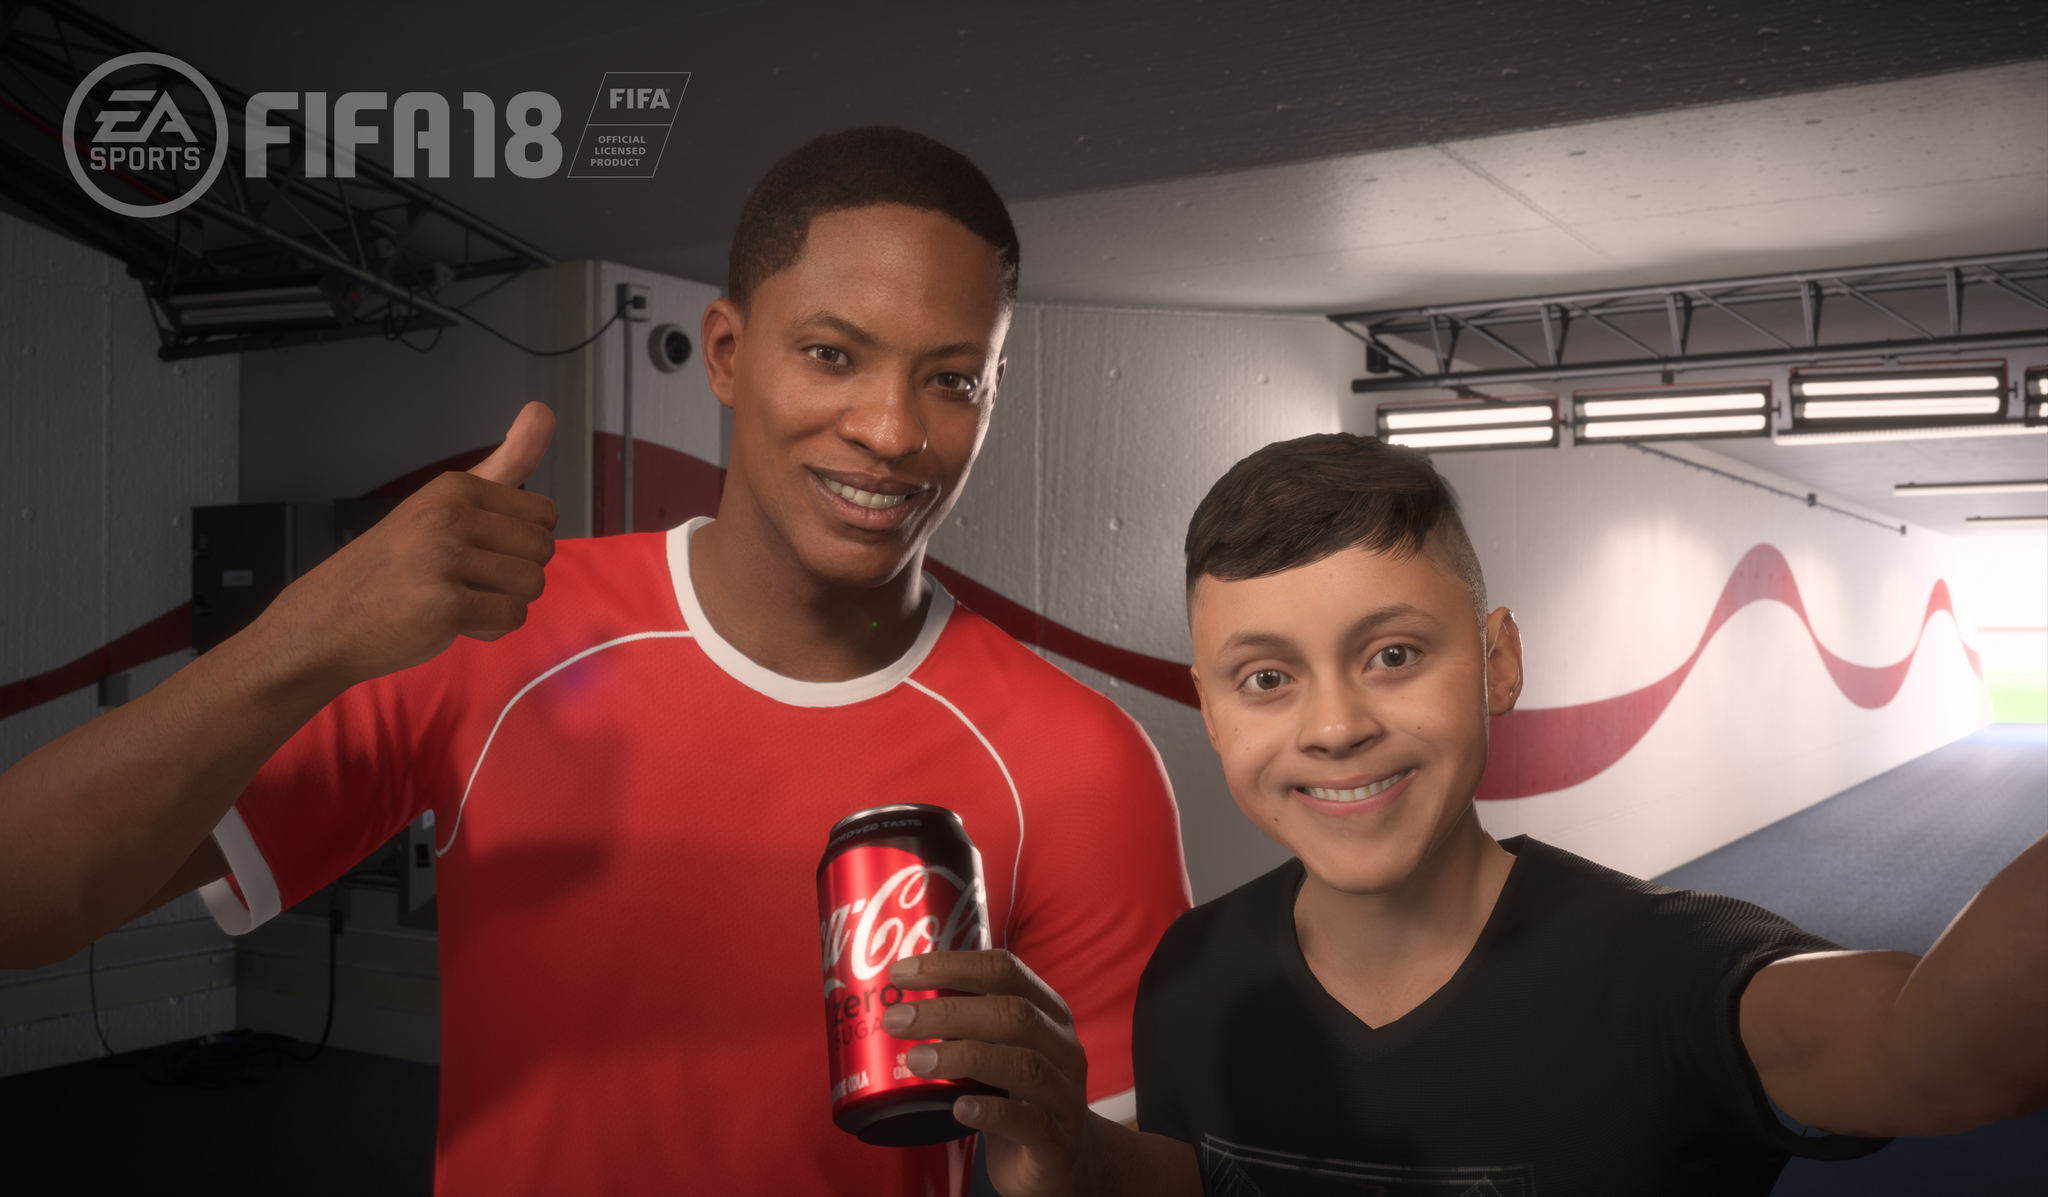 Coca-Cola sponsrar fotbollsspelare i FIFA18